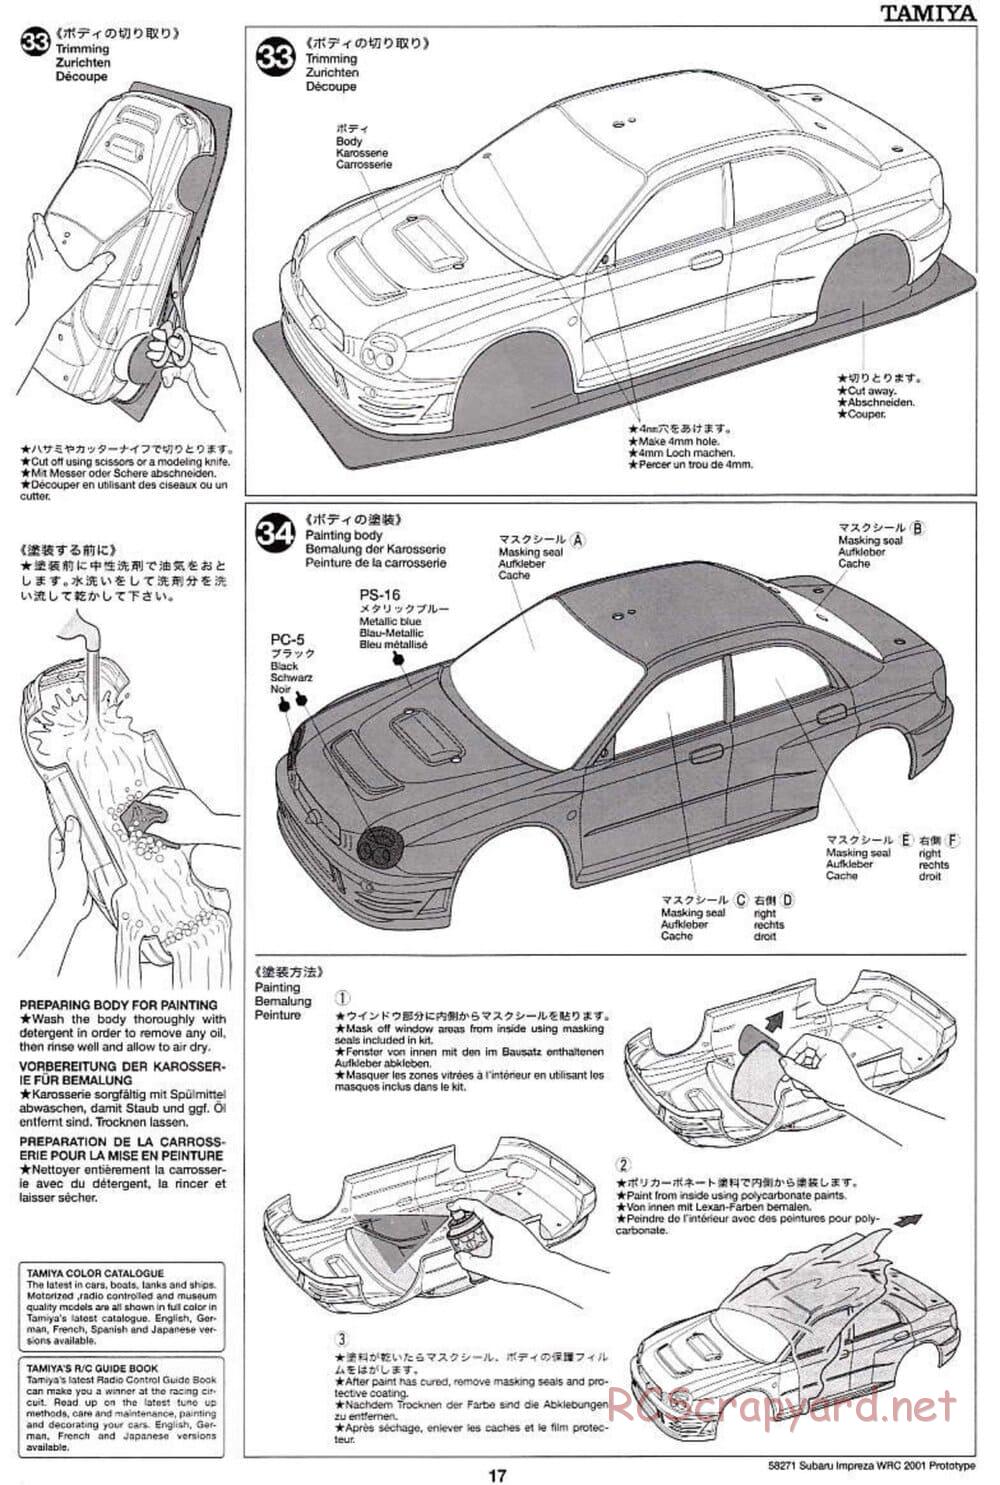 Tamiya - Subaru Impreza WRC 2001 Prototype - TB-01 Chassis - Manual - Page 17